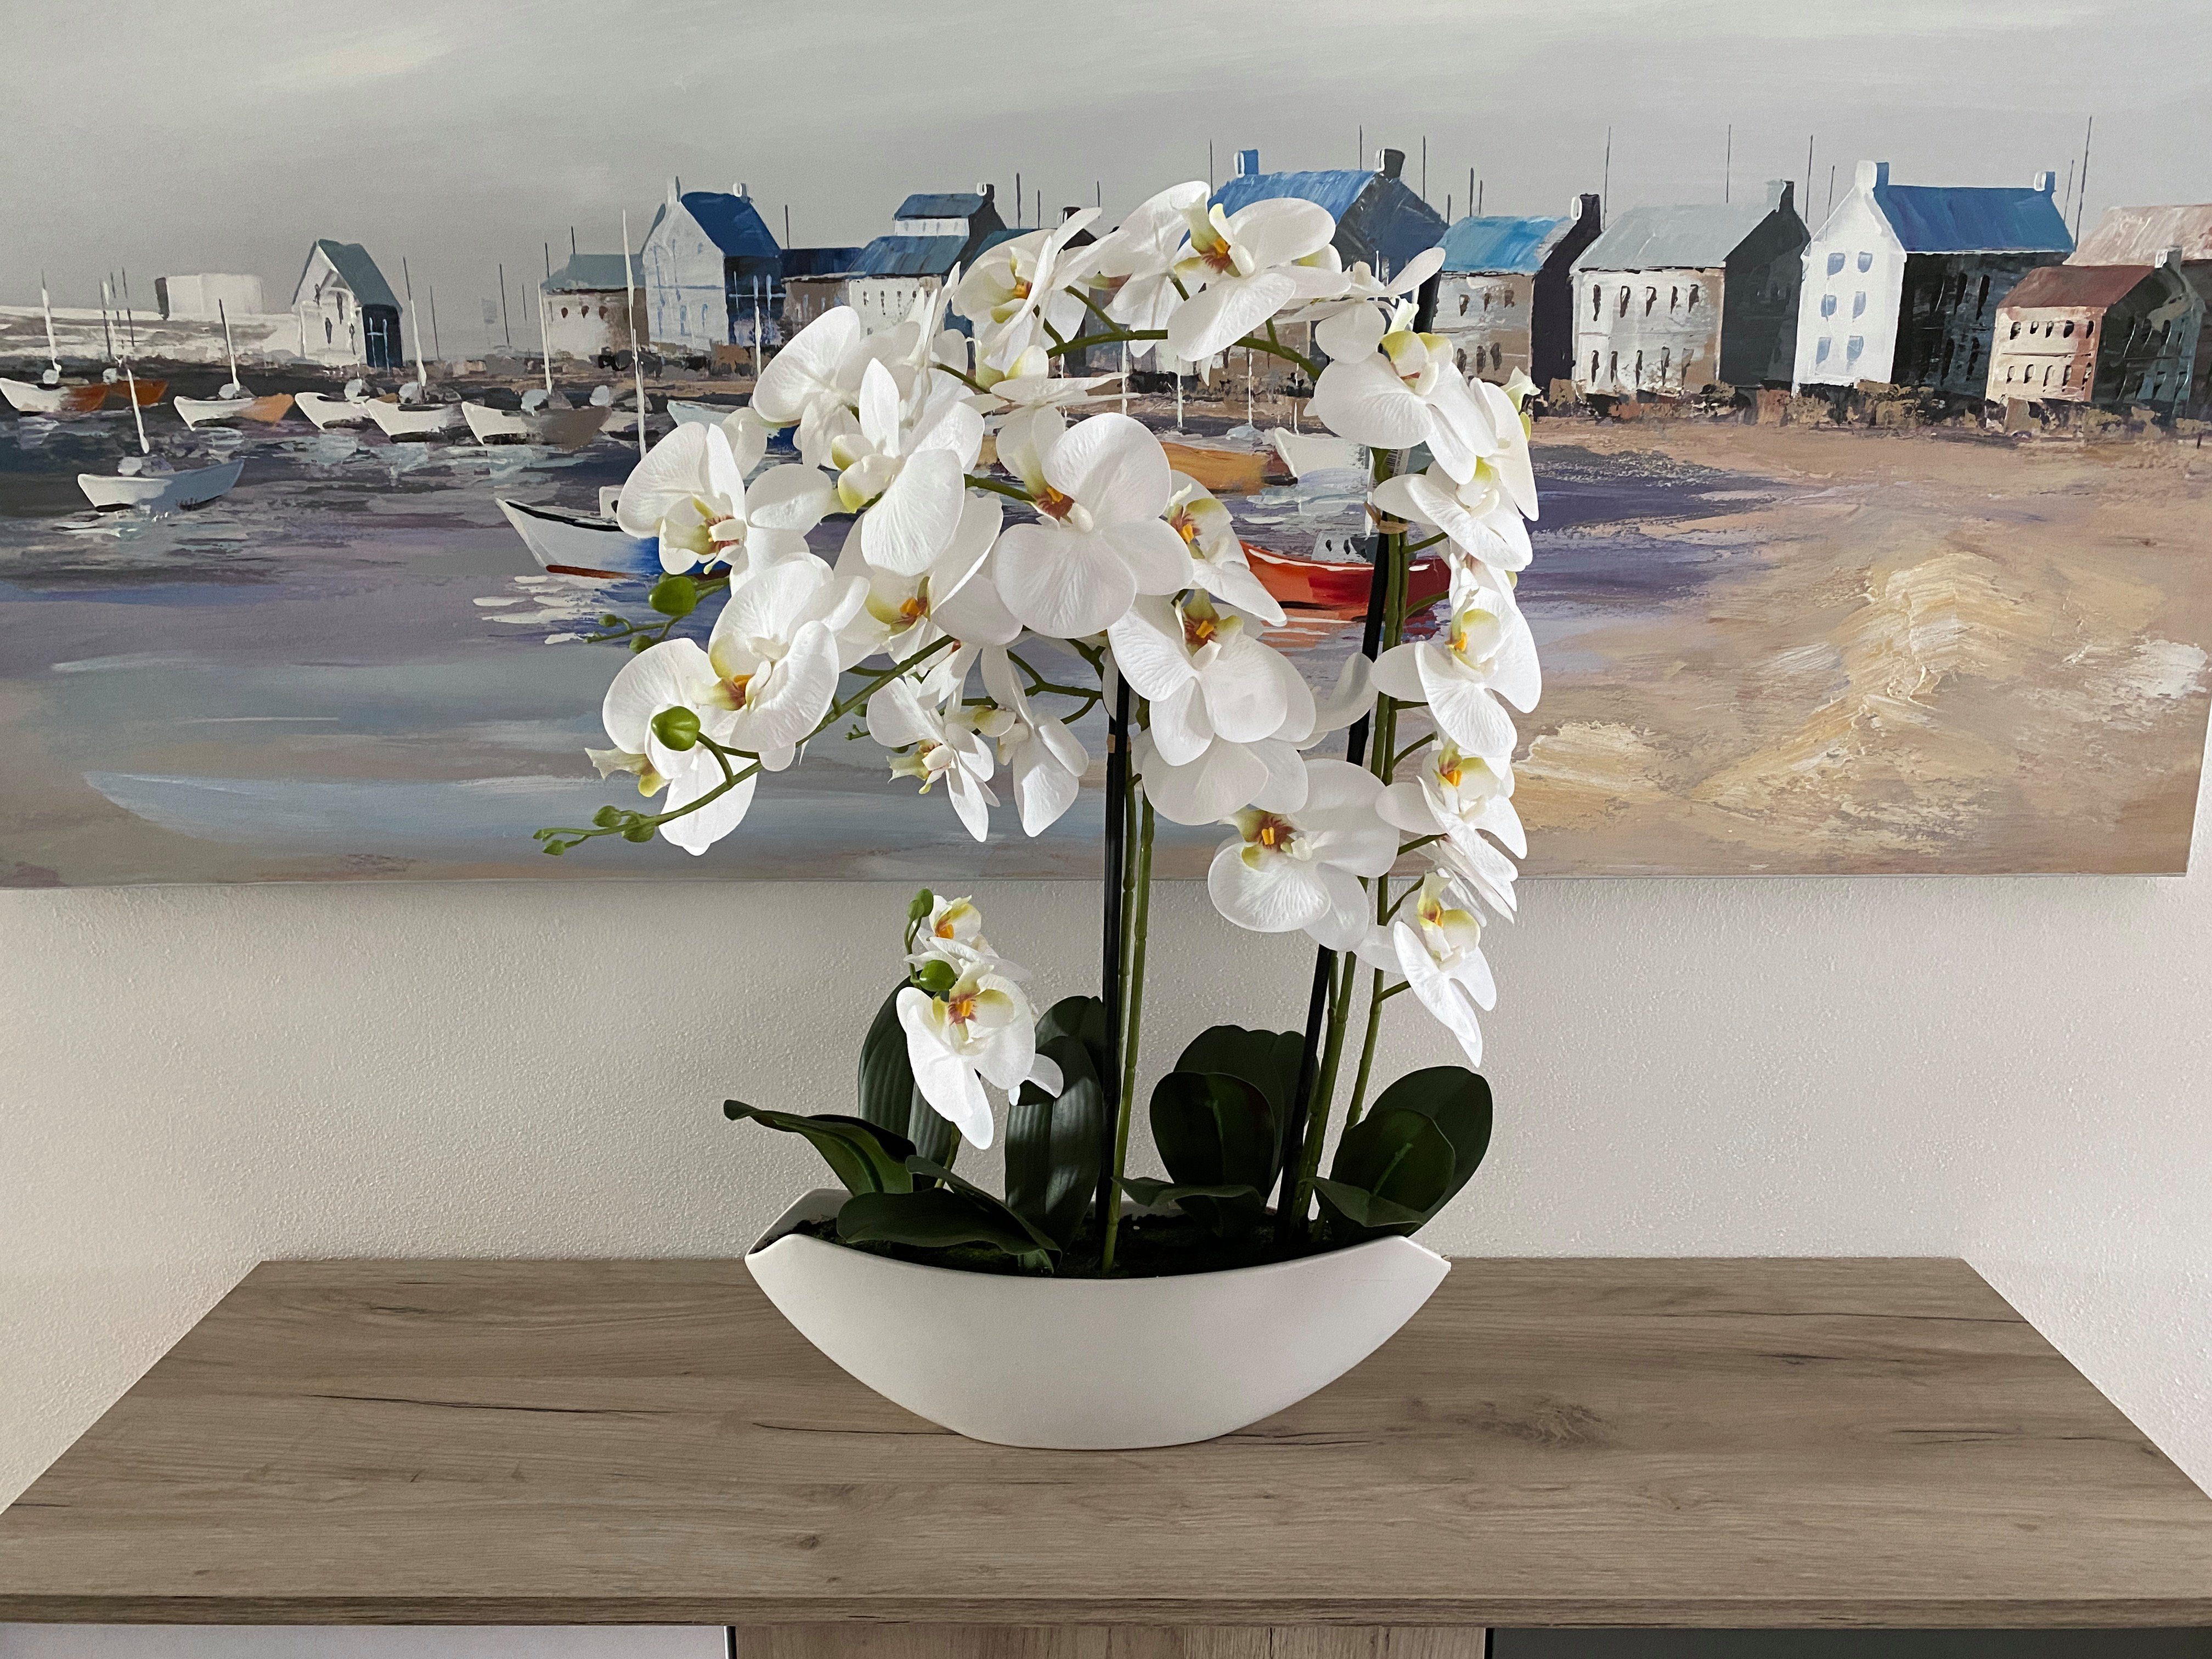 cm, Dahlia Arrangement Orchidee Keramiktopf, 70 weißem Kunstblume Studios in